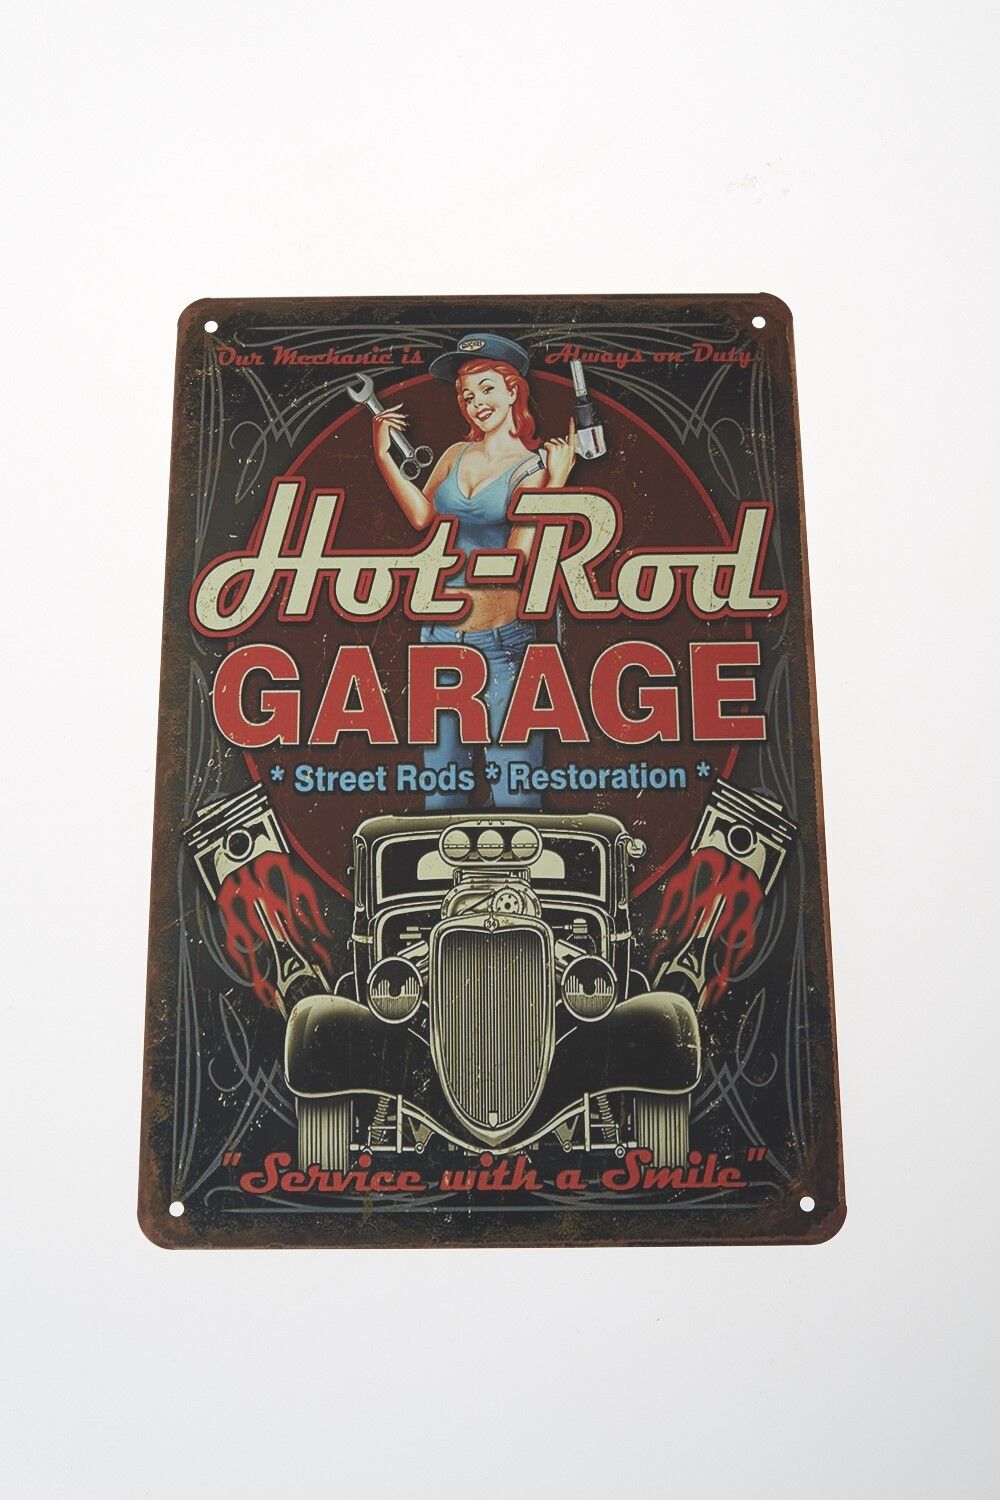 Hot Rod Garage Vintage Metal Plate Retro Wall Poster Street Rods Plaque Decor